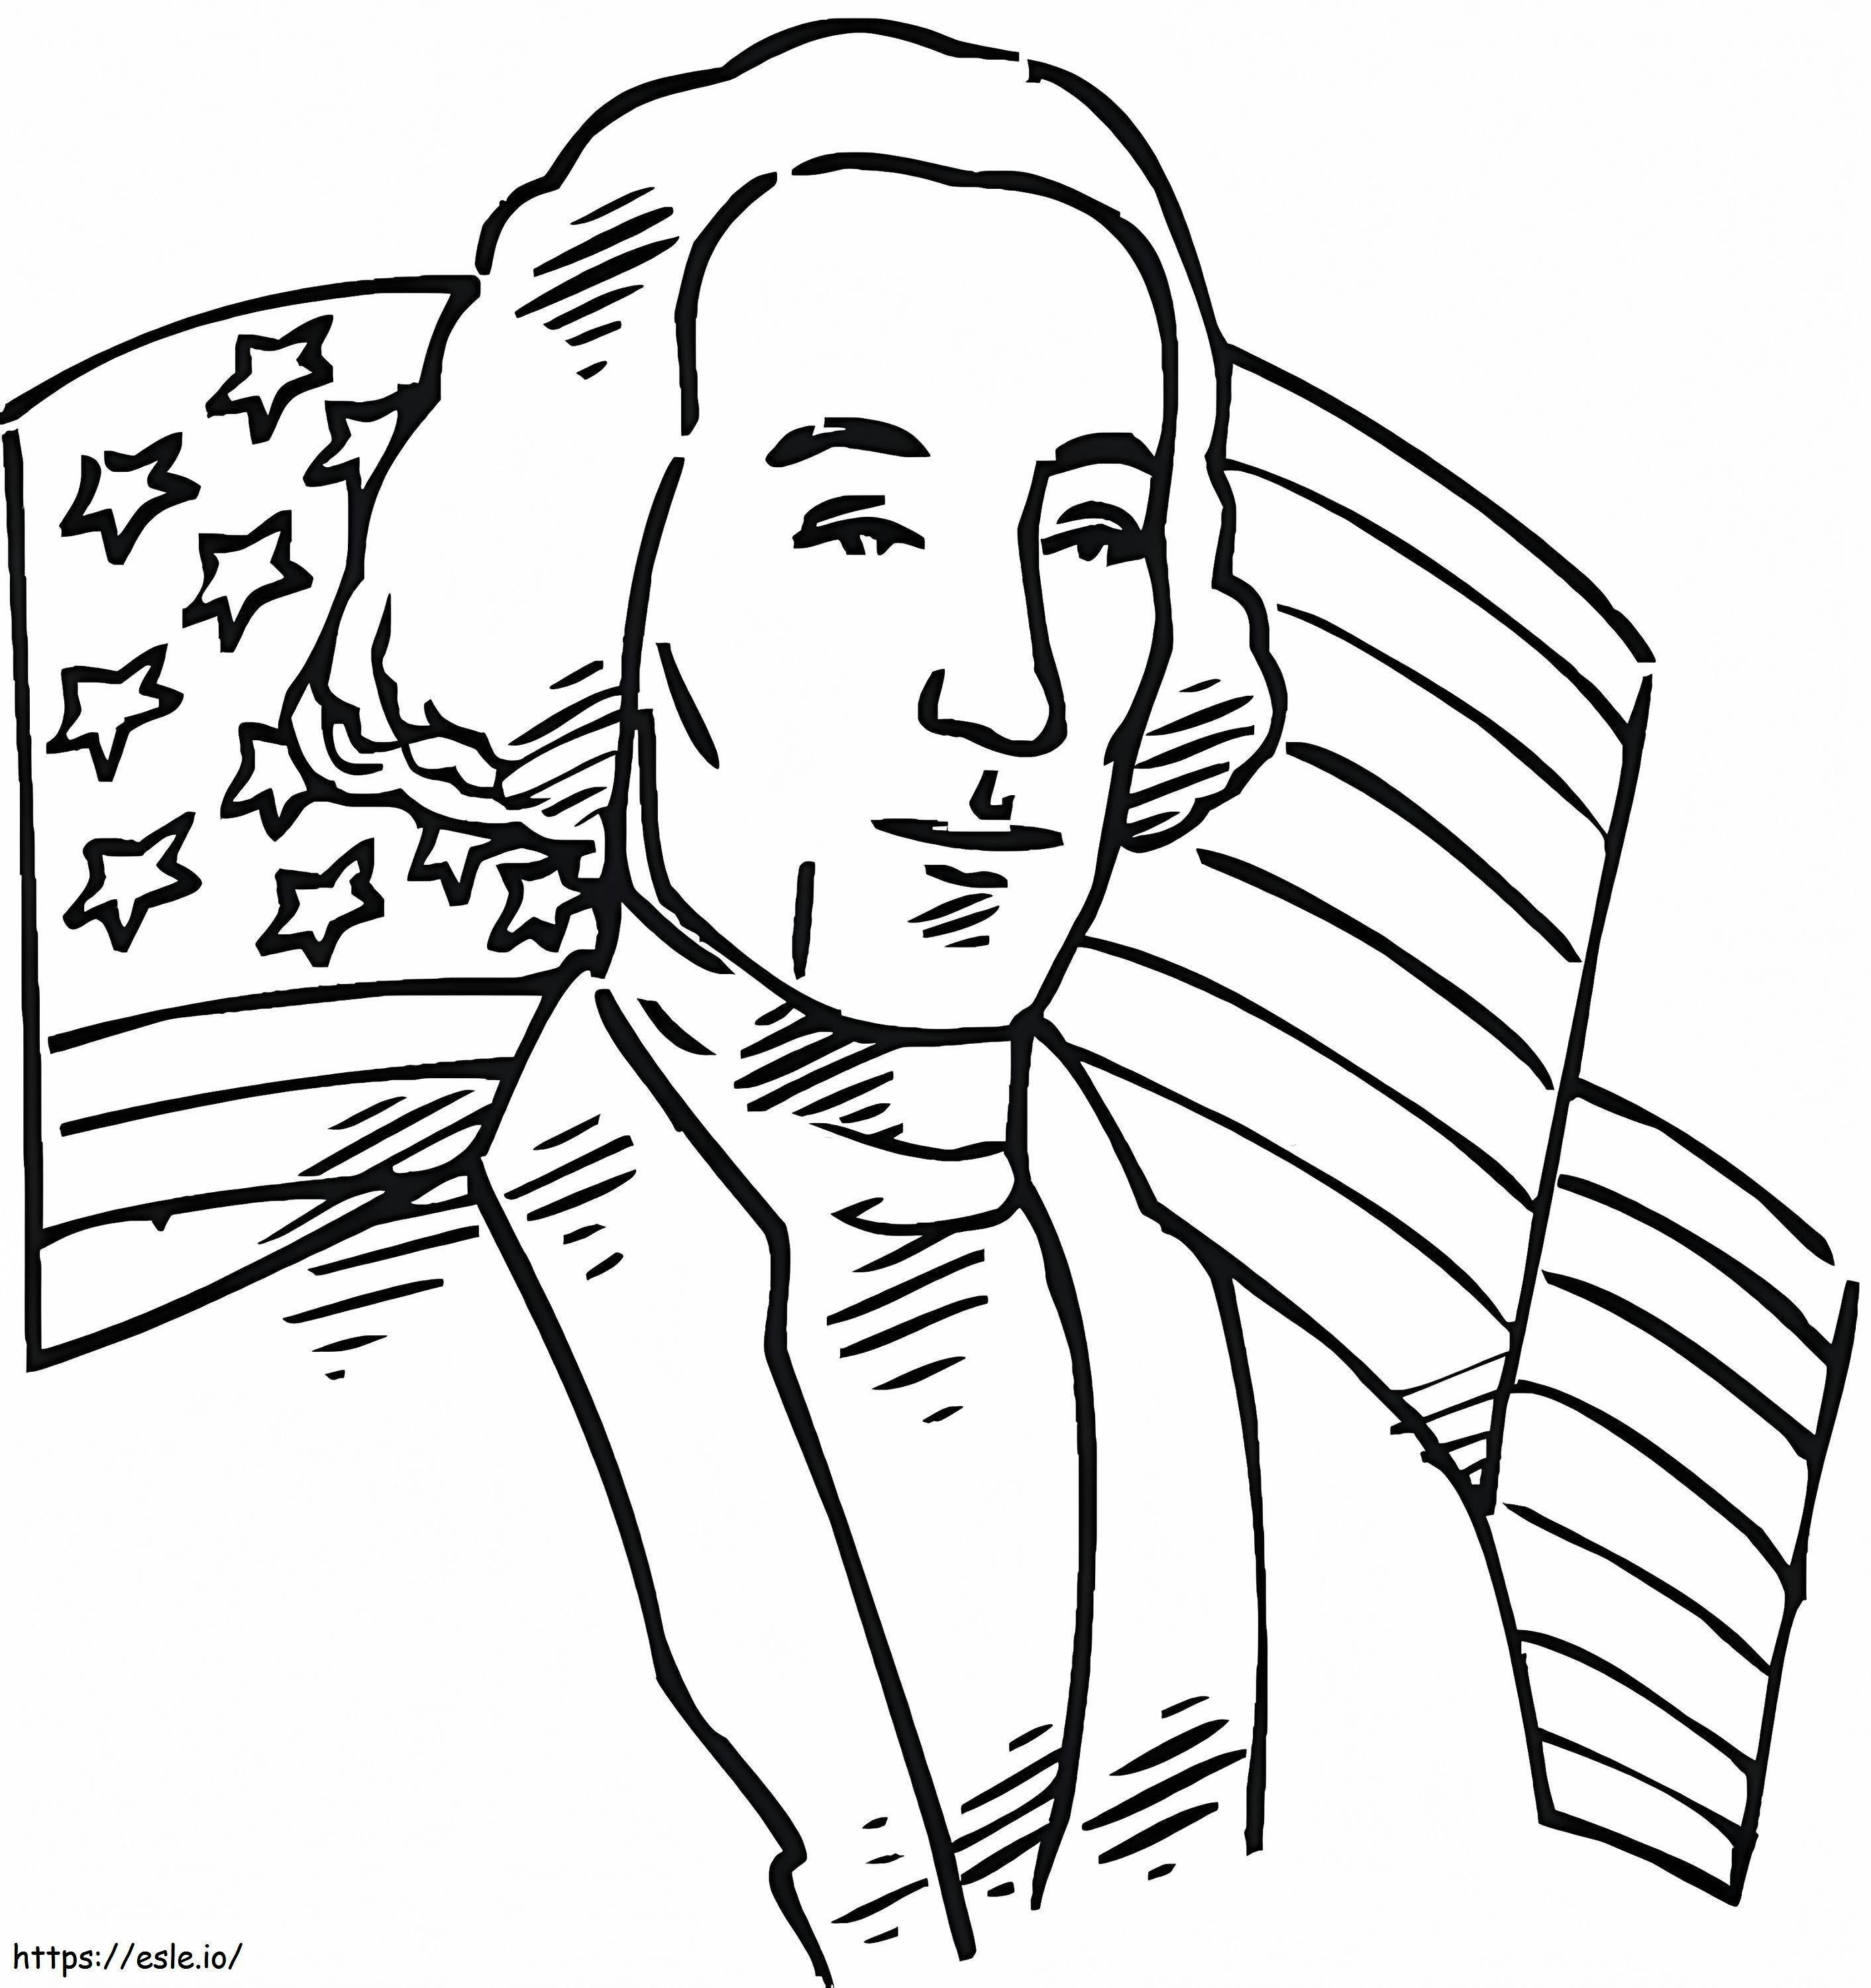 Erster US-Präsident George Washington ausmalbilder